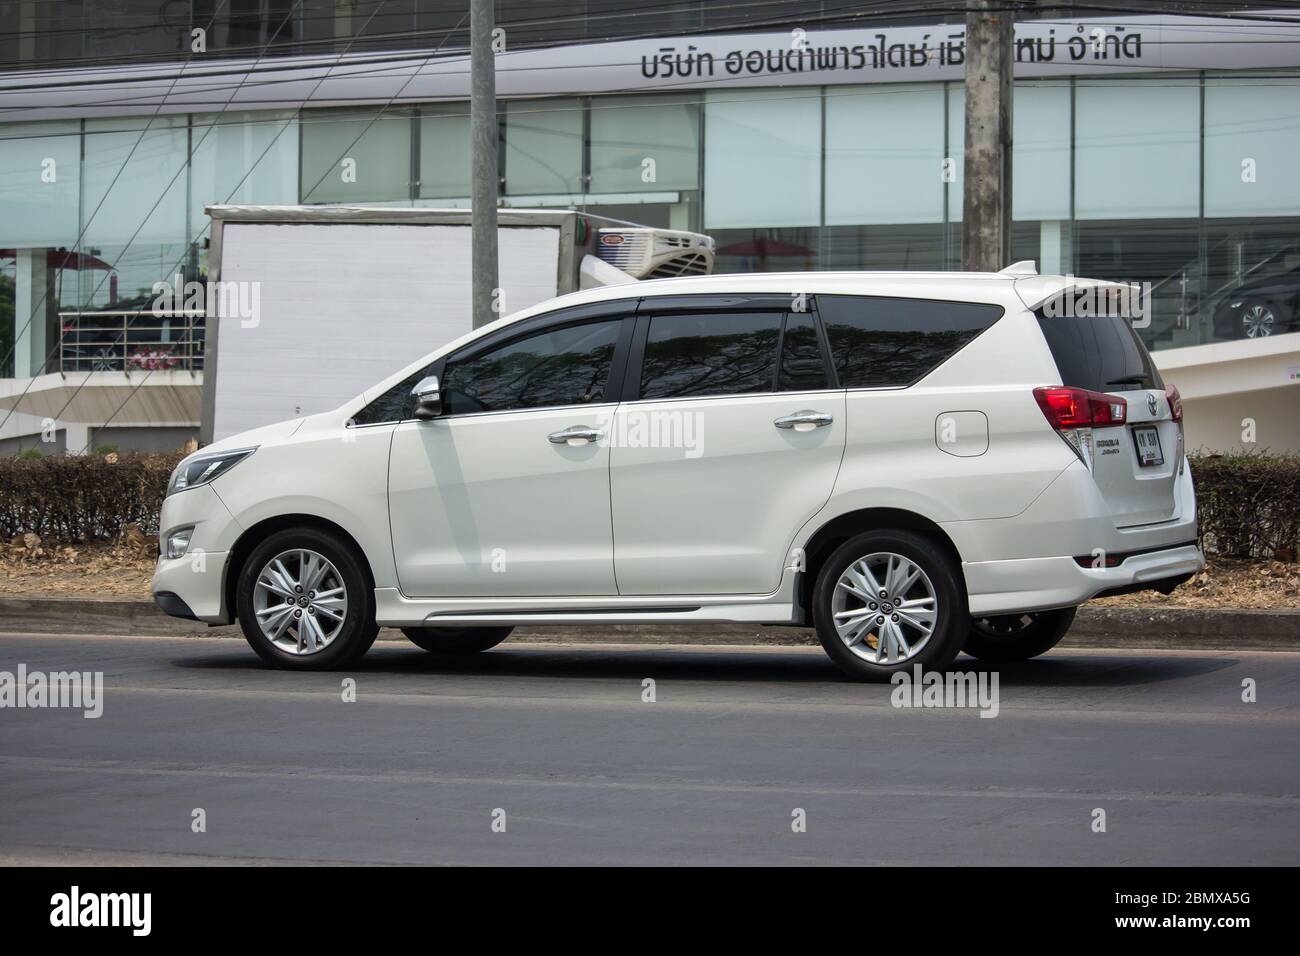 Chiangmai Thailand April 9 2020 New Toyota Innova Crysta